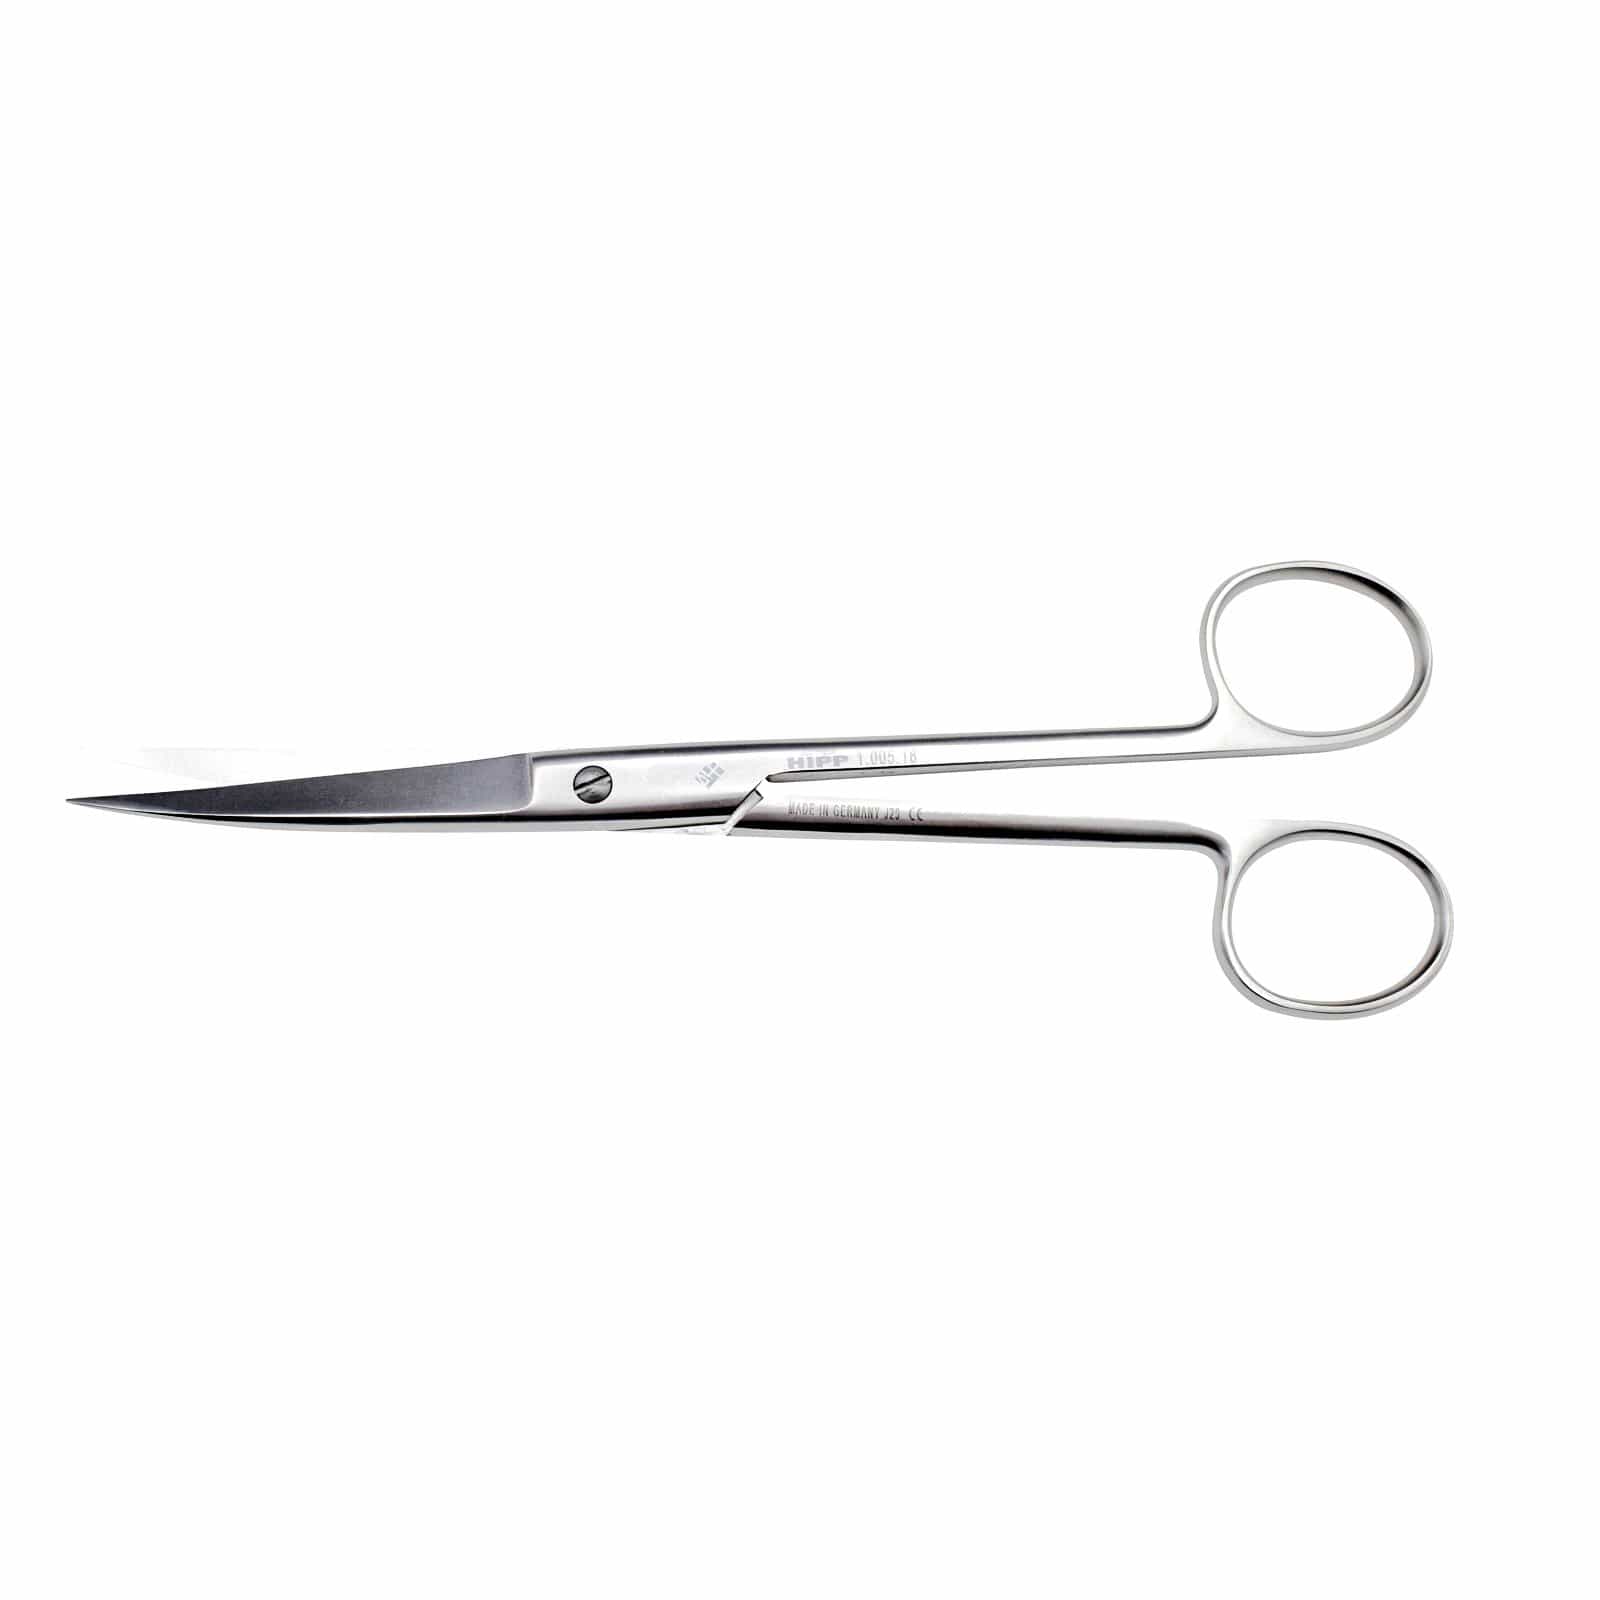 Hipp Surgical Instruments 18cm / Curved / Sharp/Sharp Hipp Surgical Scissors